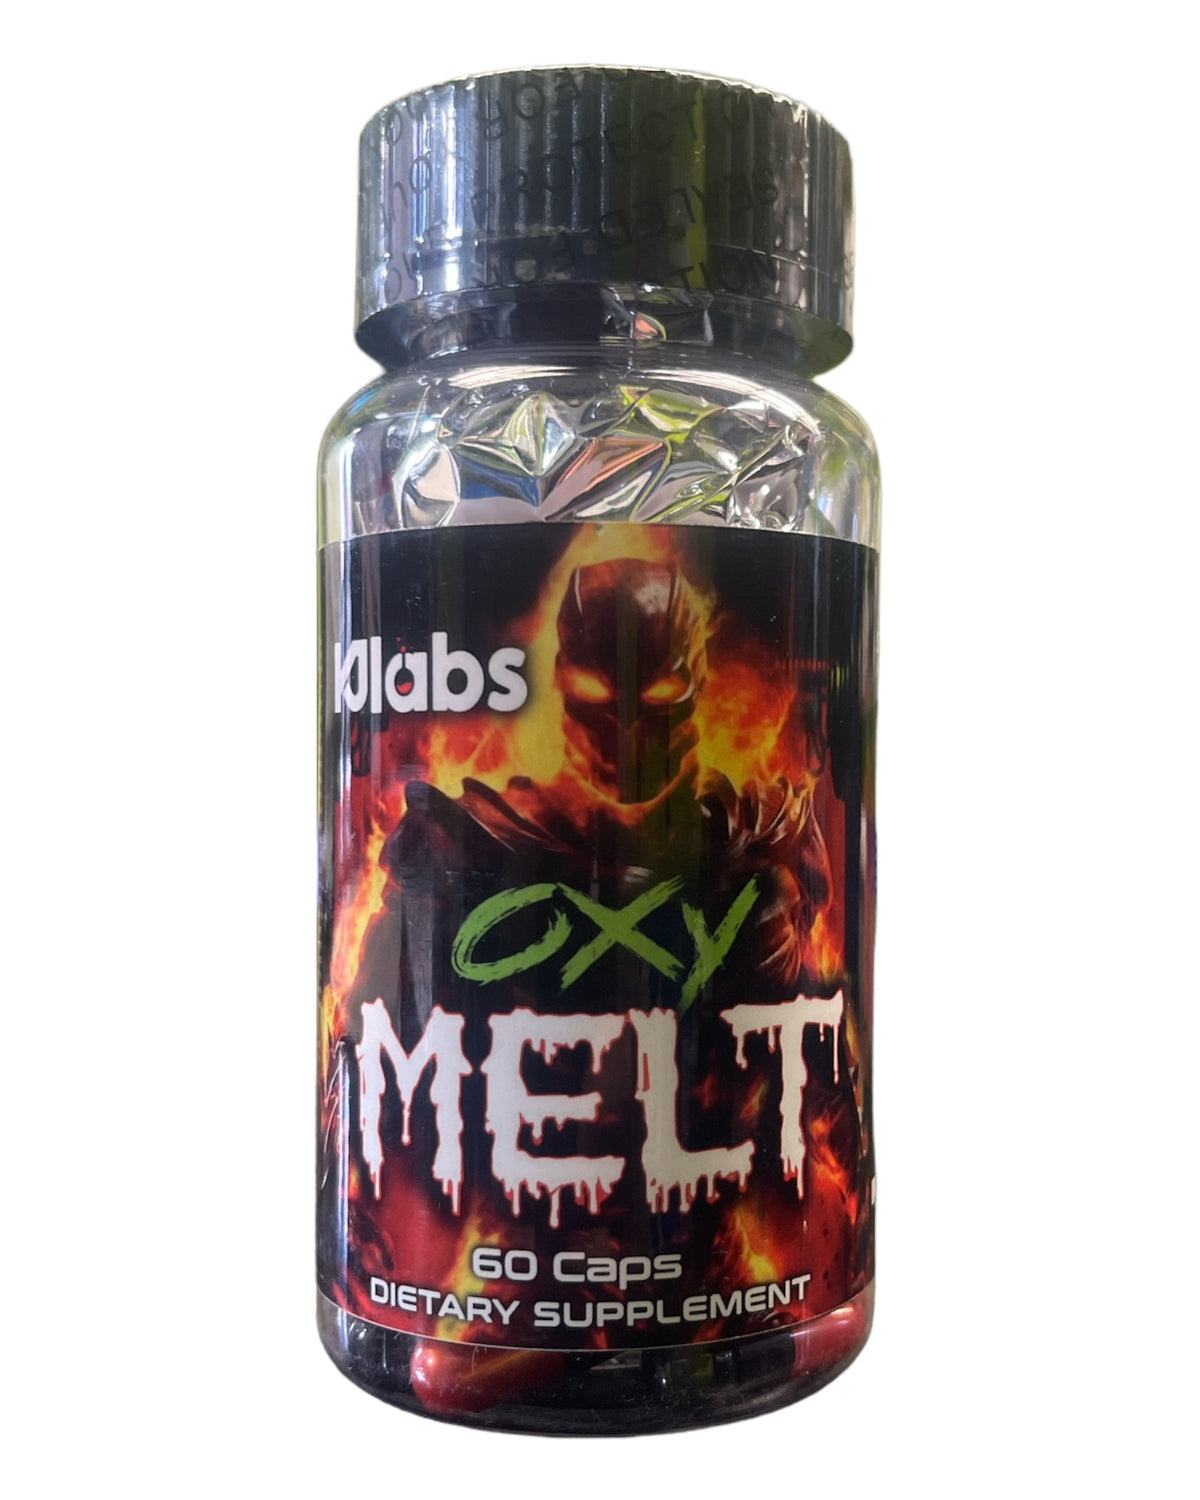 KJ Labs - Oxy Melt Fat Burner (60 Caps)